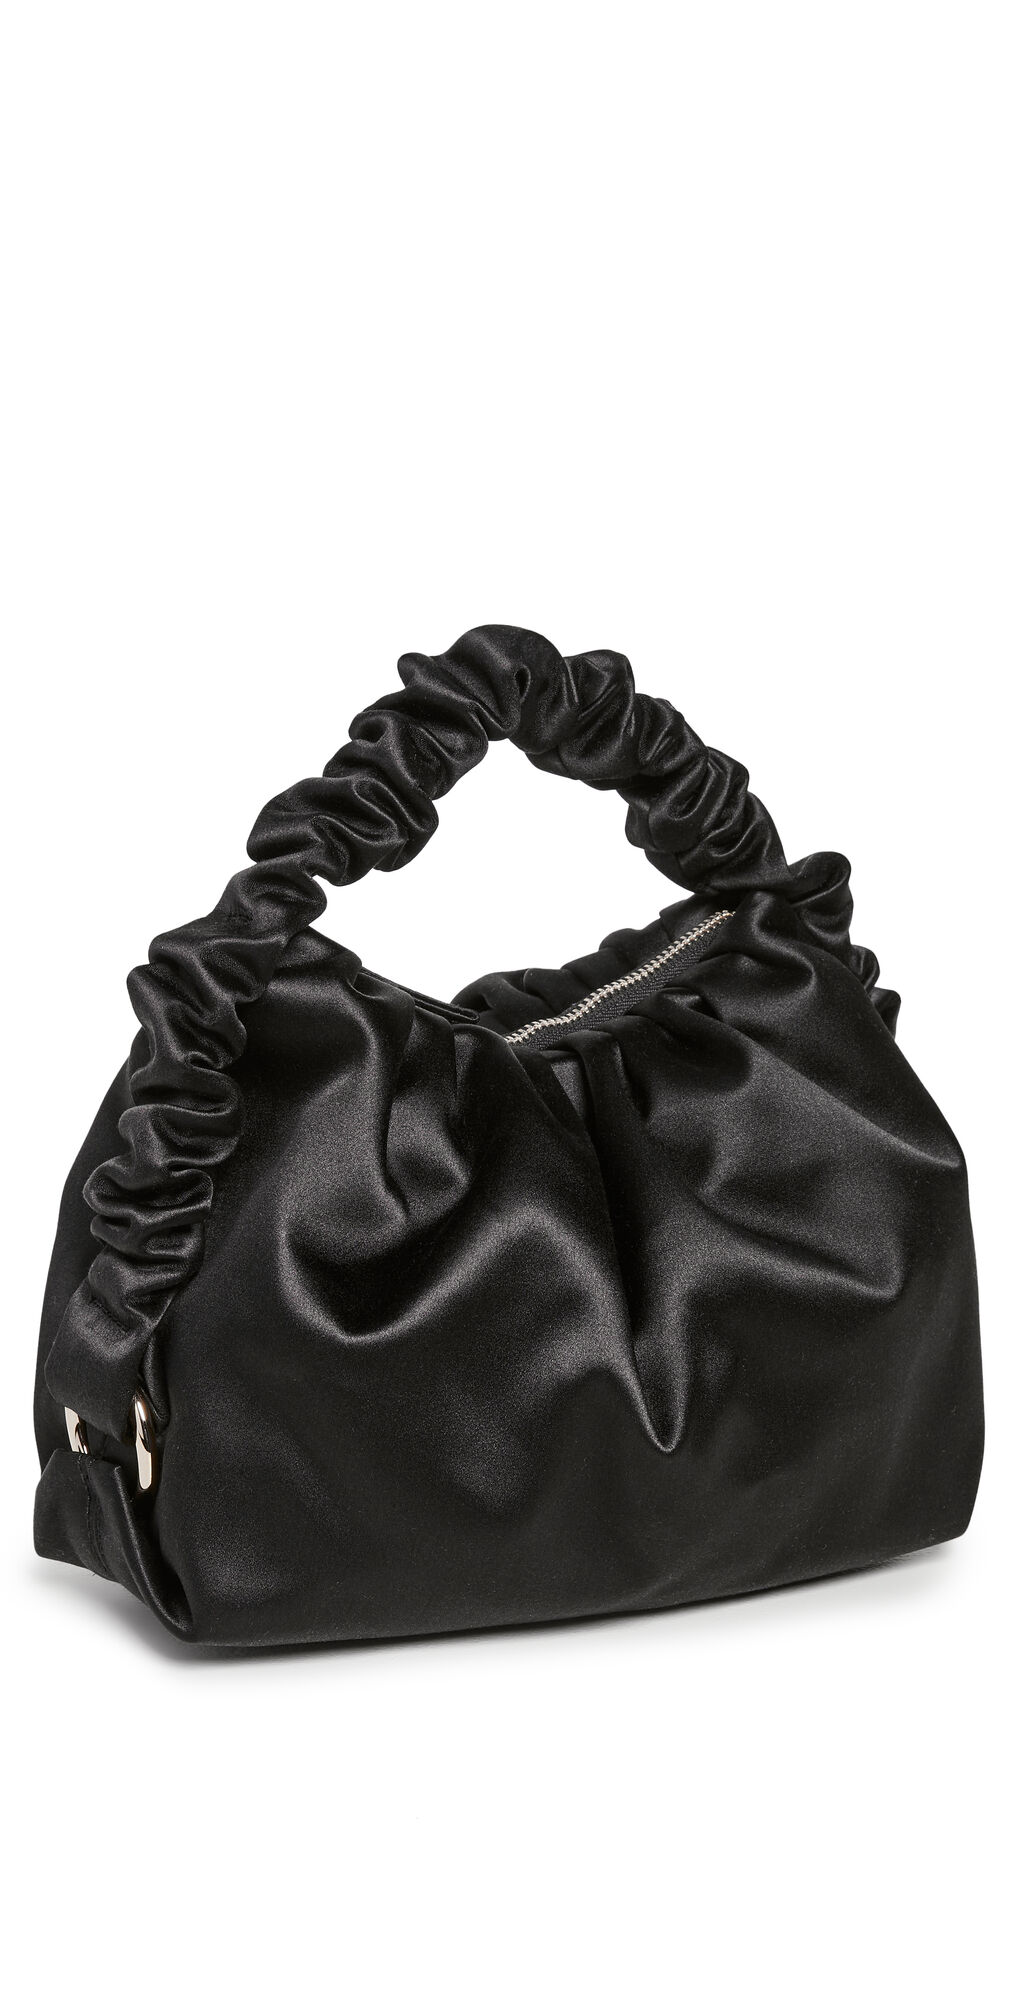 S.Joon Mini Scrunchie Bao Bag Black One Size  Black  size:One Size